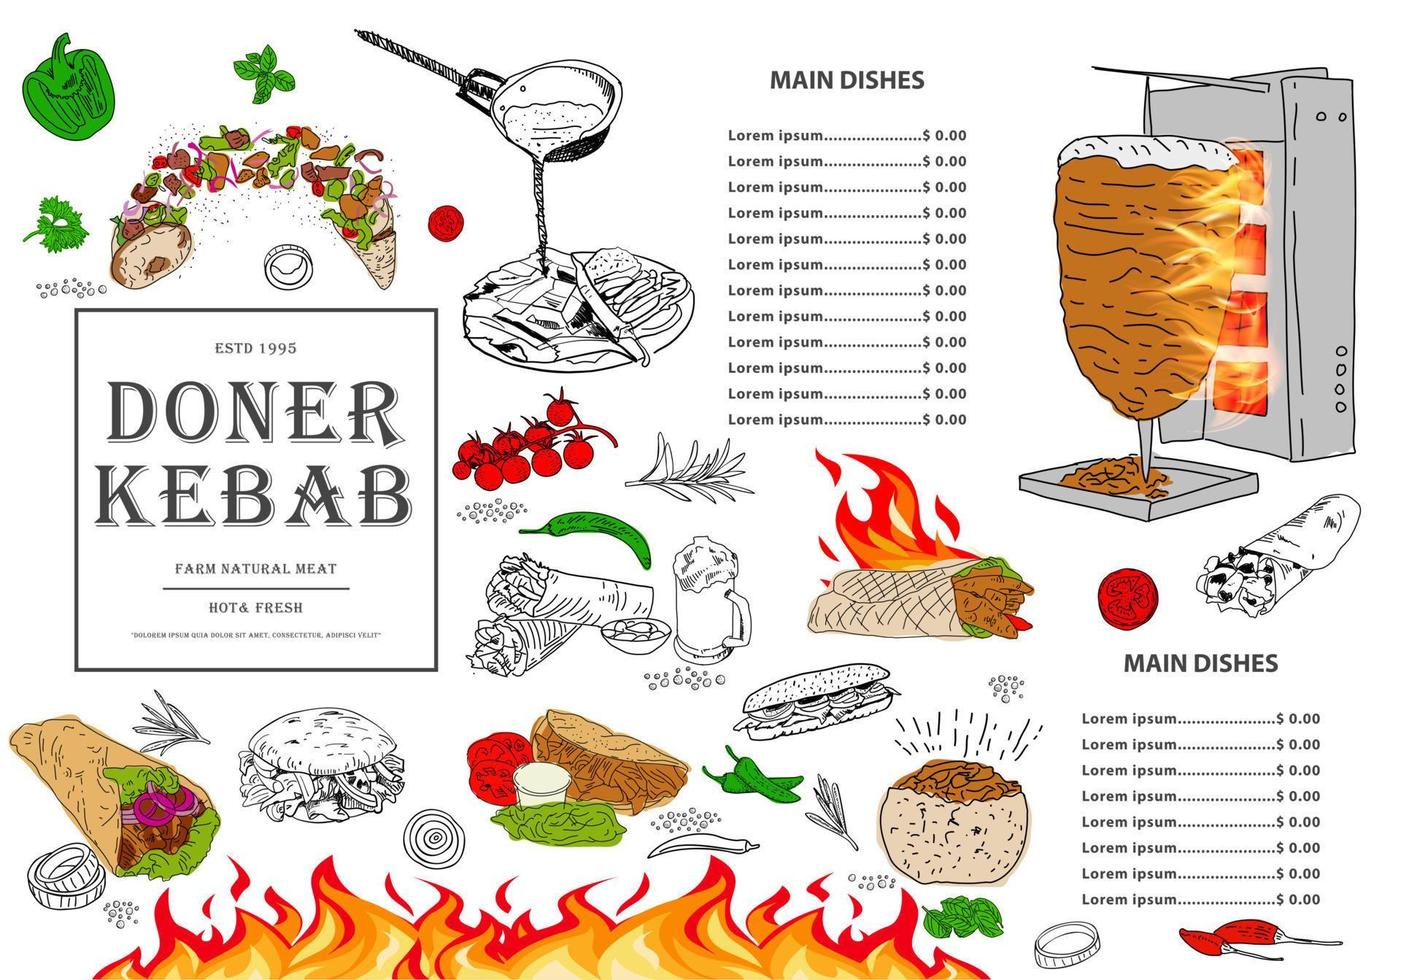 placemat menu restaurant döner kebab brochure. vector